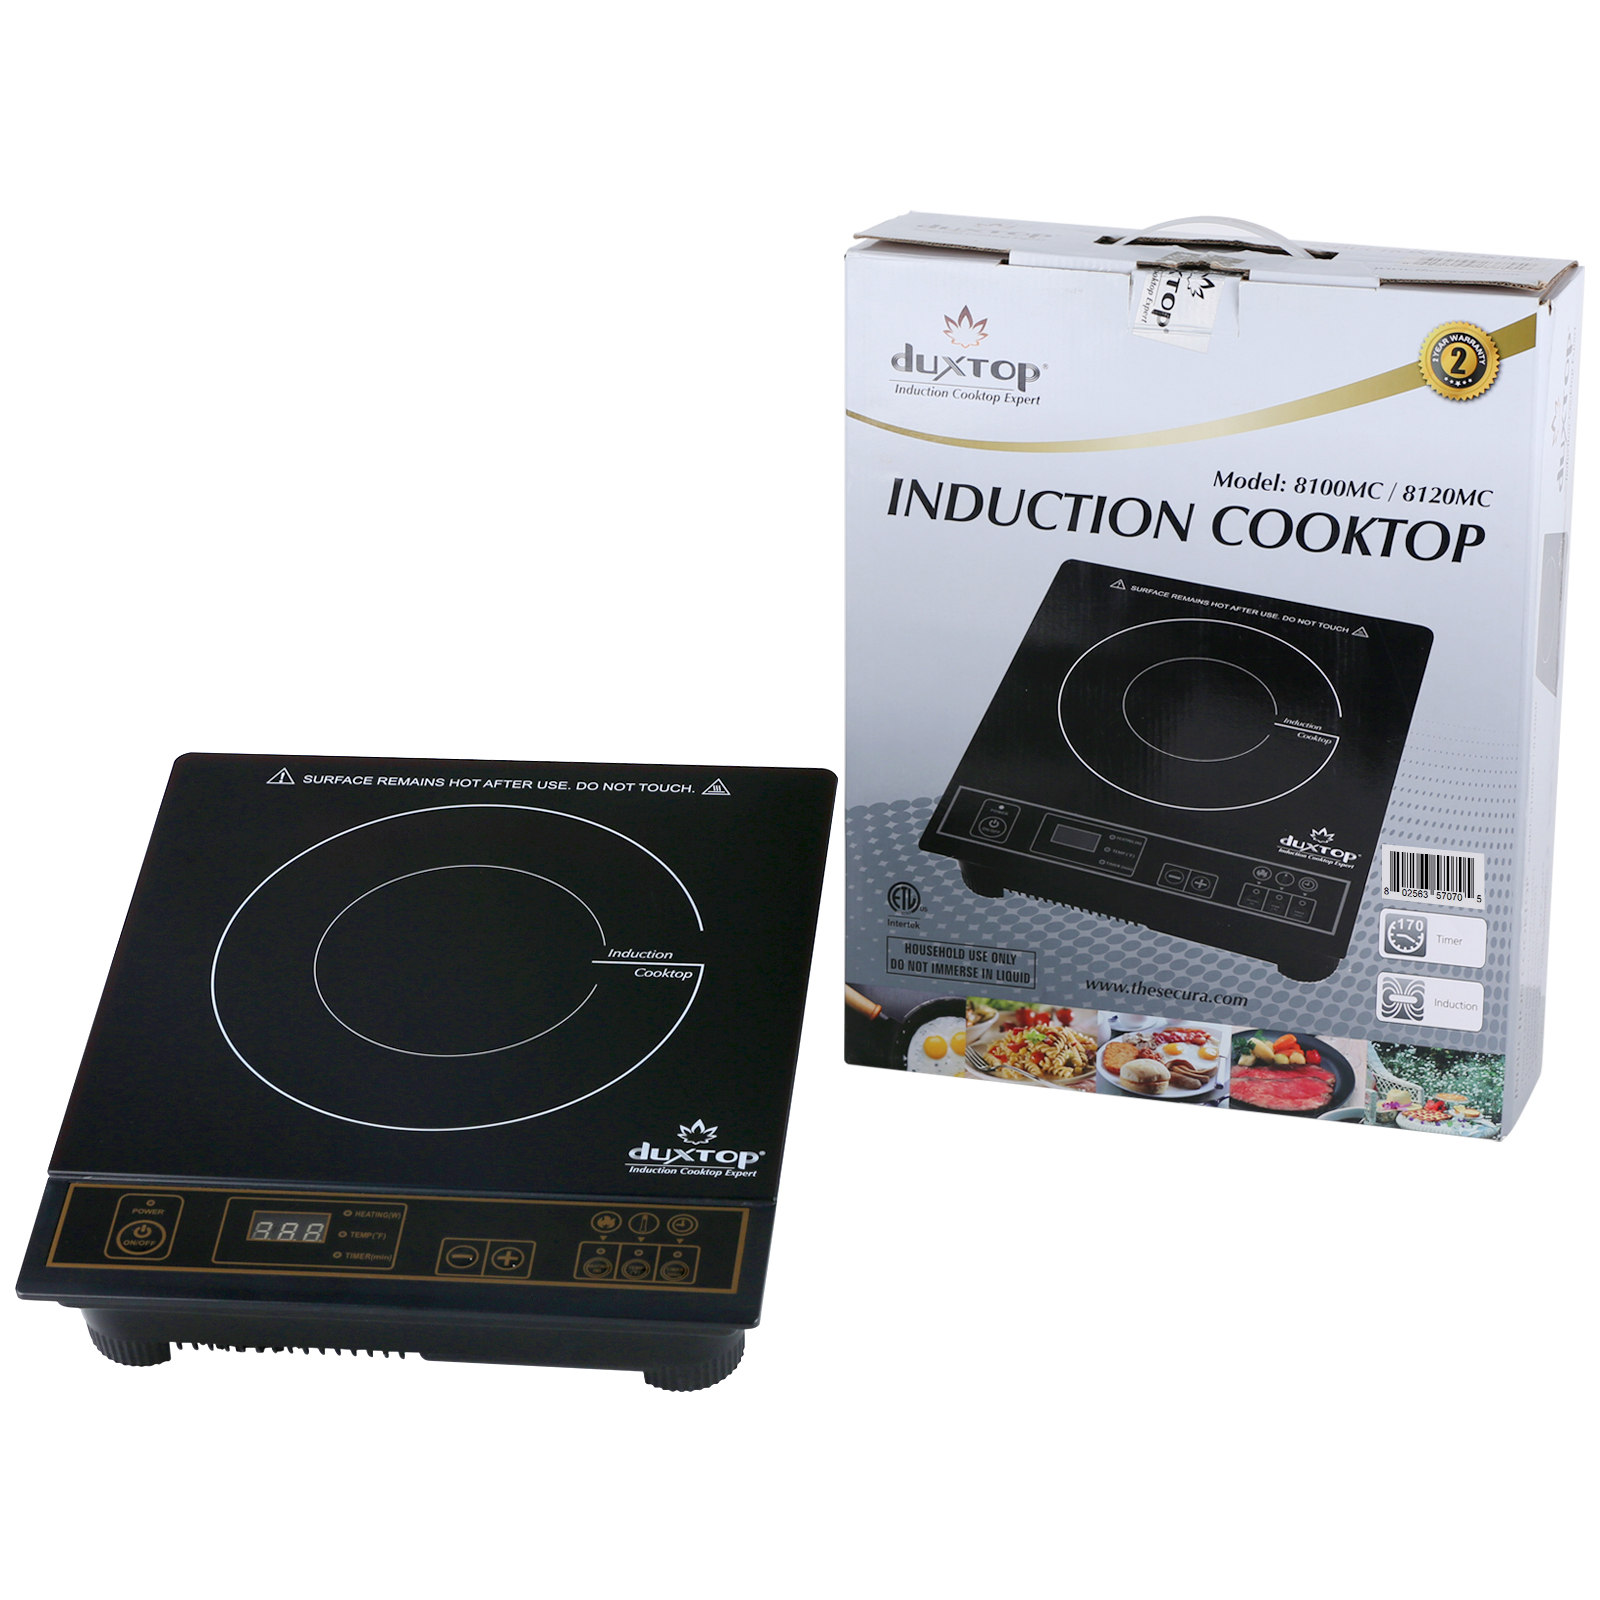 Duxtop 8100MC Portable Induction Cooktop Review: Efficient but Limited